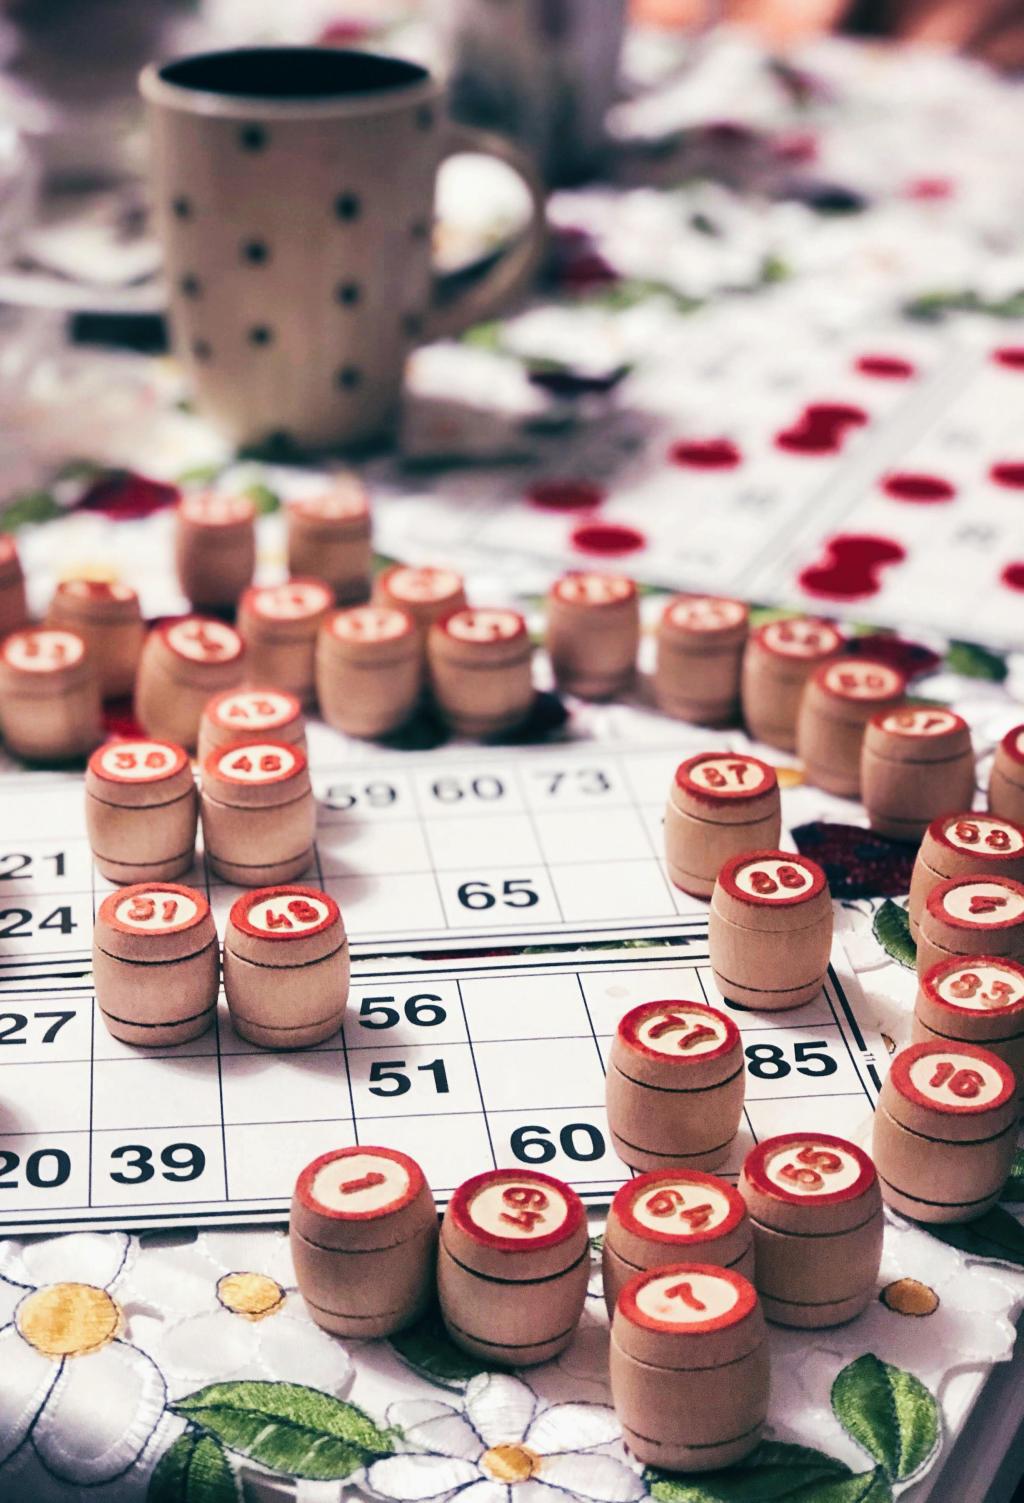 Can eSports gamblers become successful bingo players